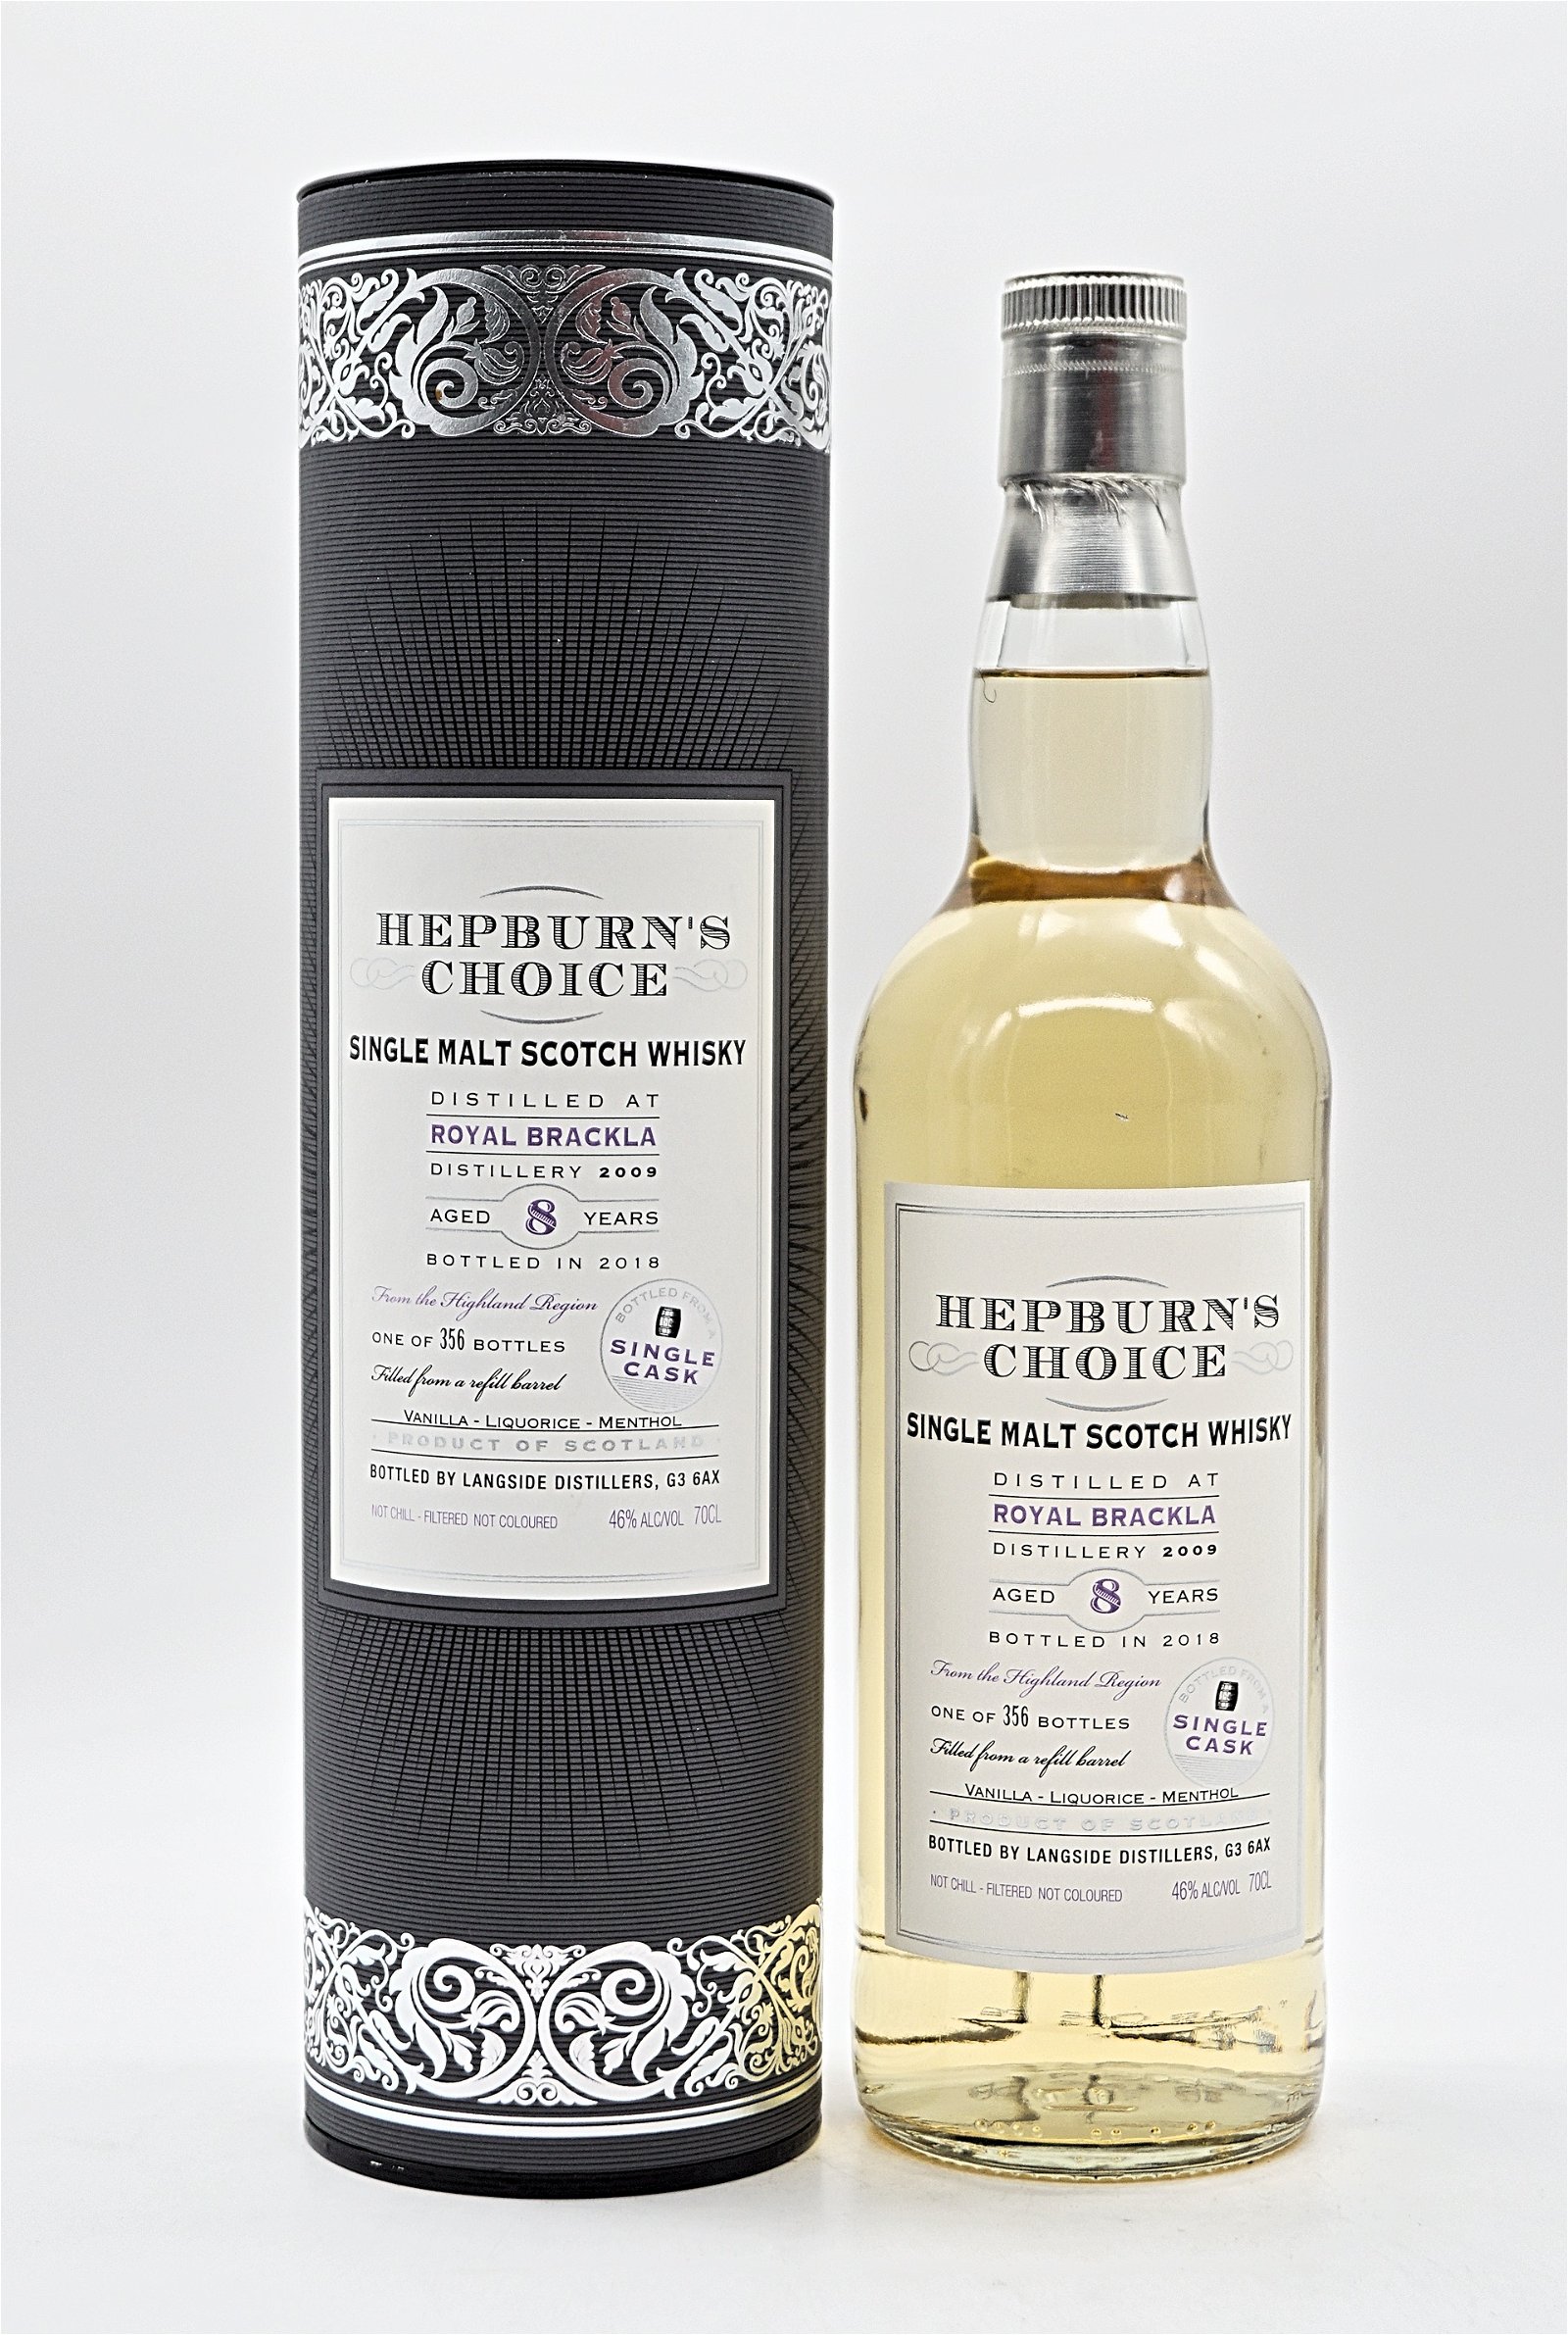 Hepburns Choice Royal Brackla 8 Jahre 2009/2018 - 356 Fl. Single Malt Scotch Whisky